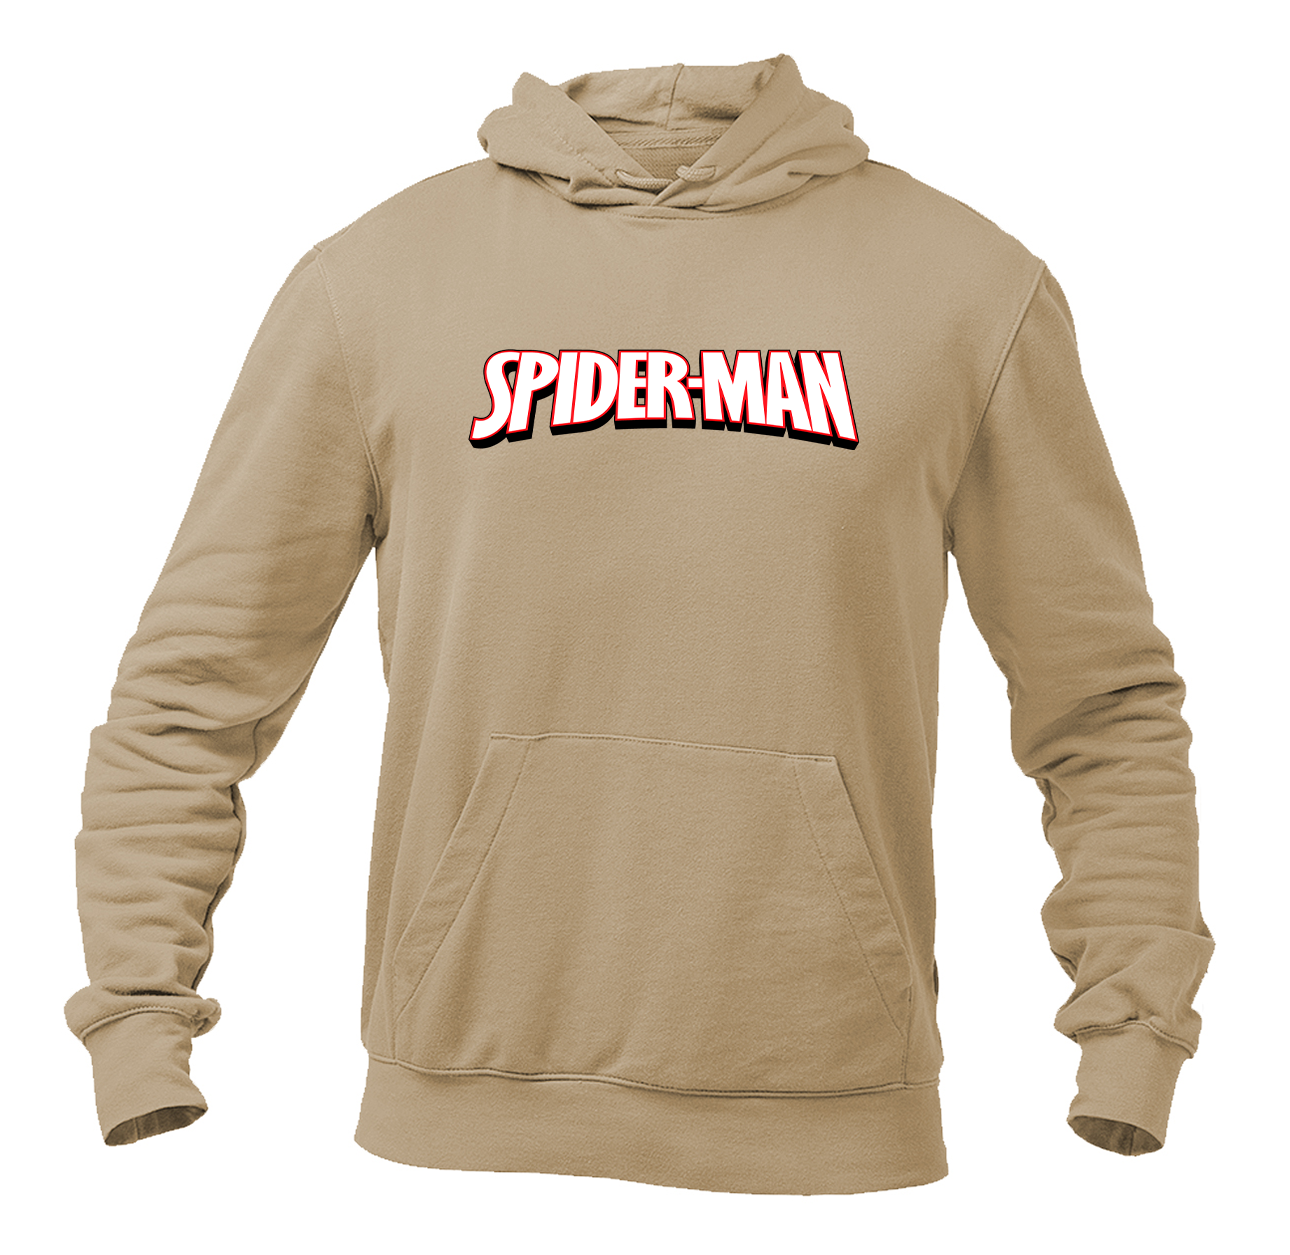 Men's Spider-Man Marvel Comics Superhero Pullover Hoodie